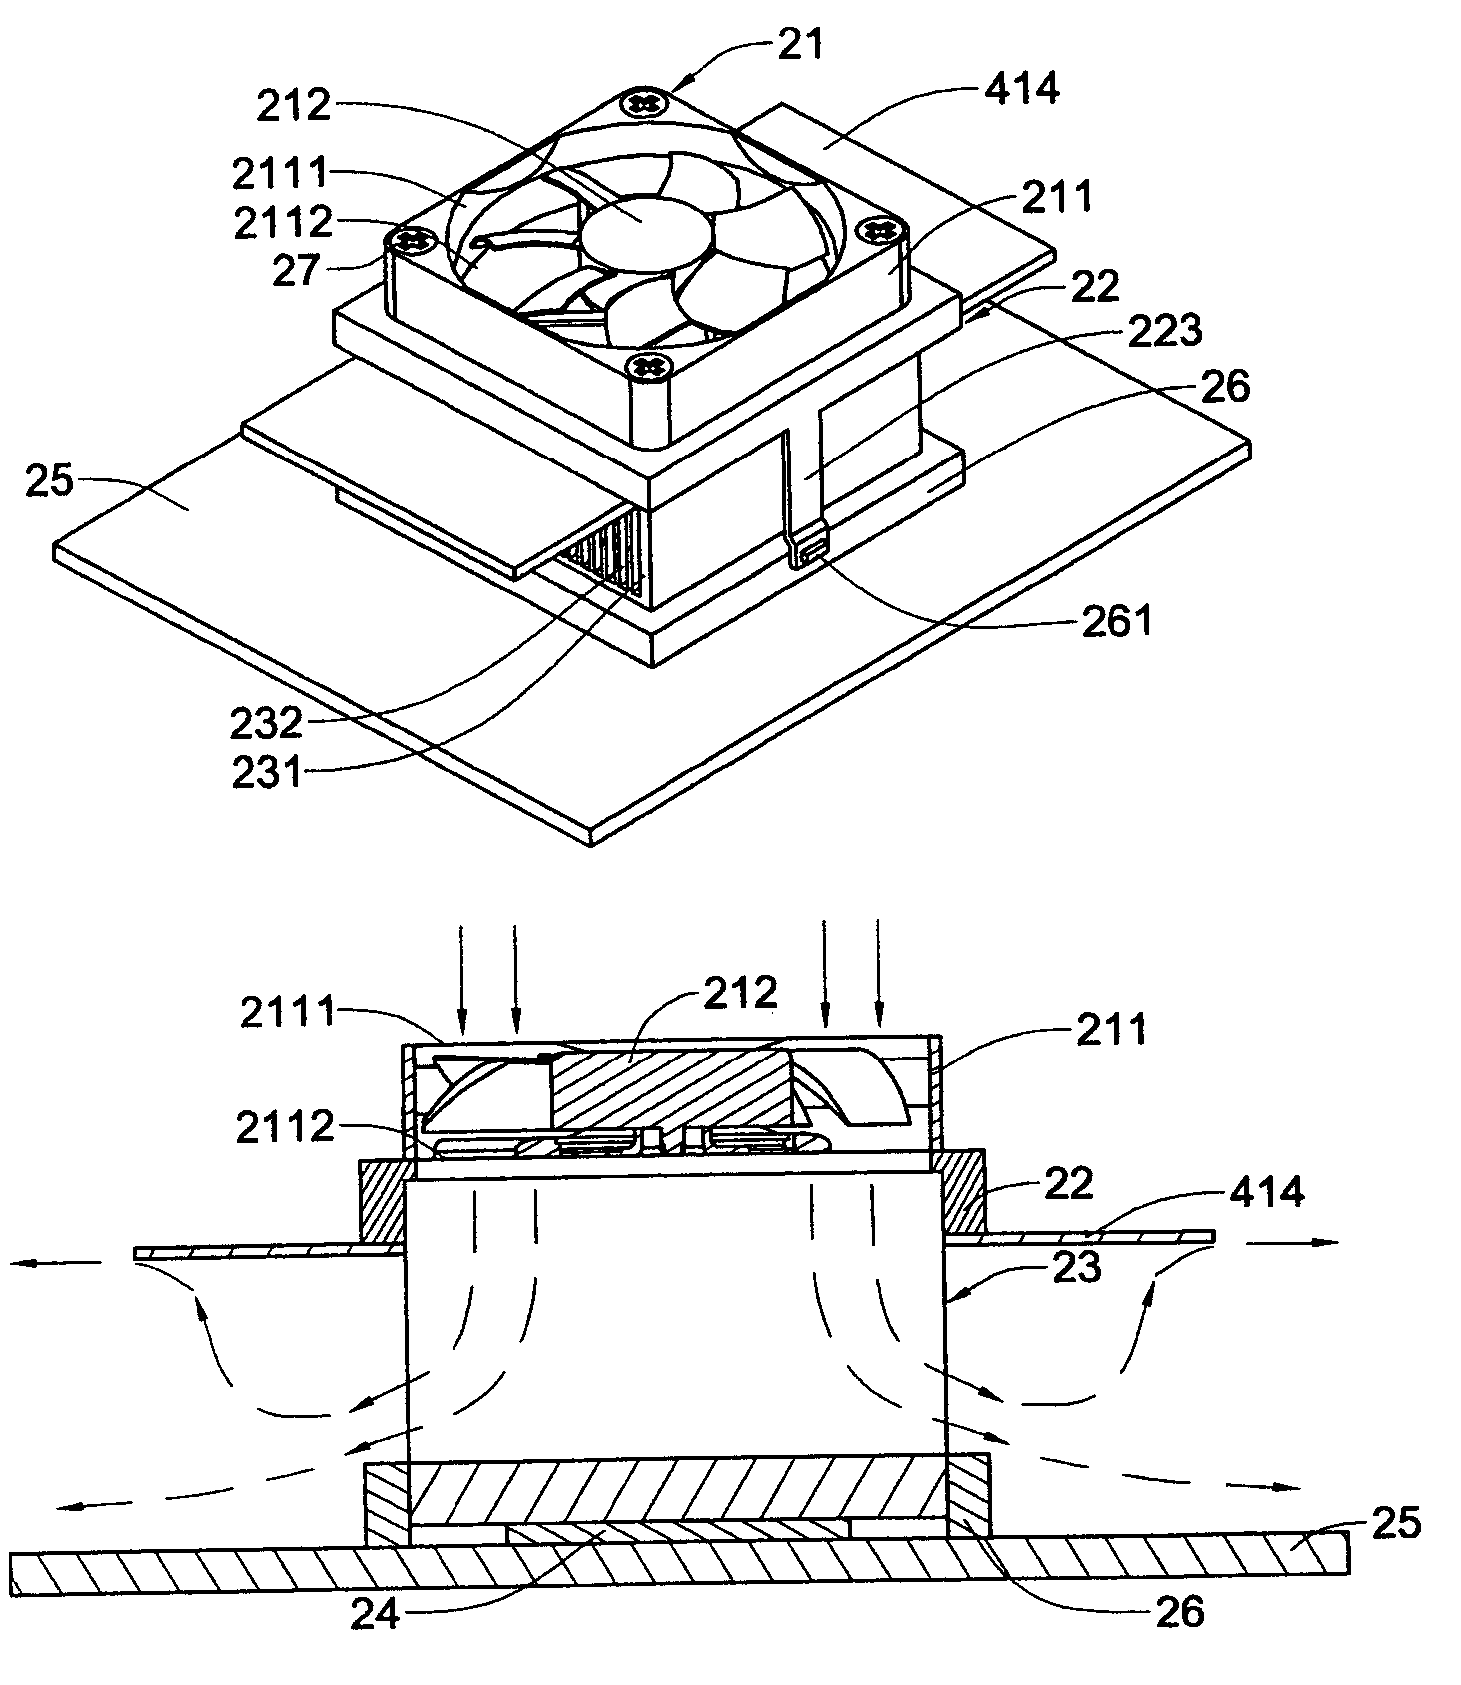 Radiation module capable of resisting reverse flow of hot fluid